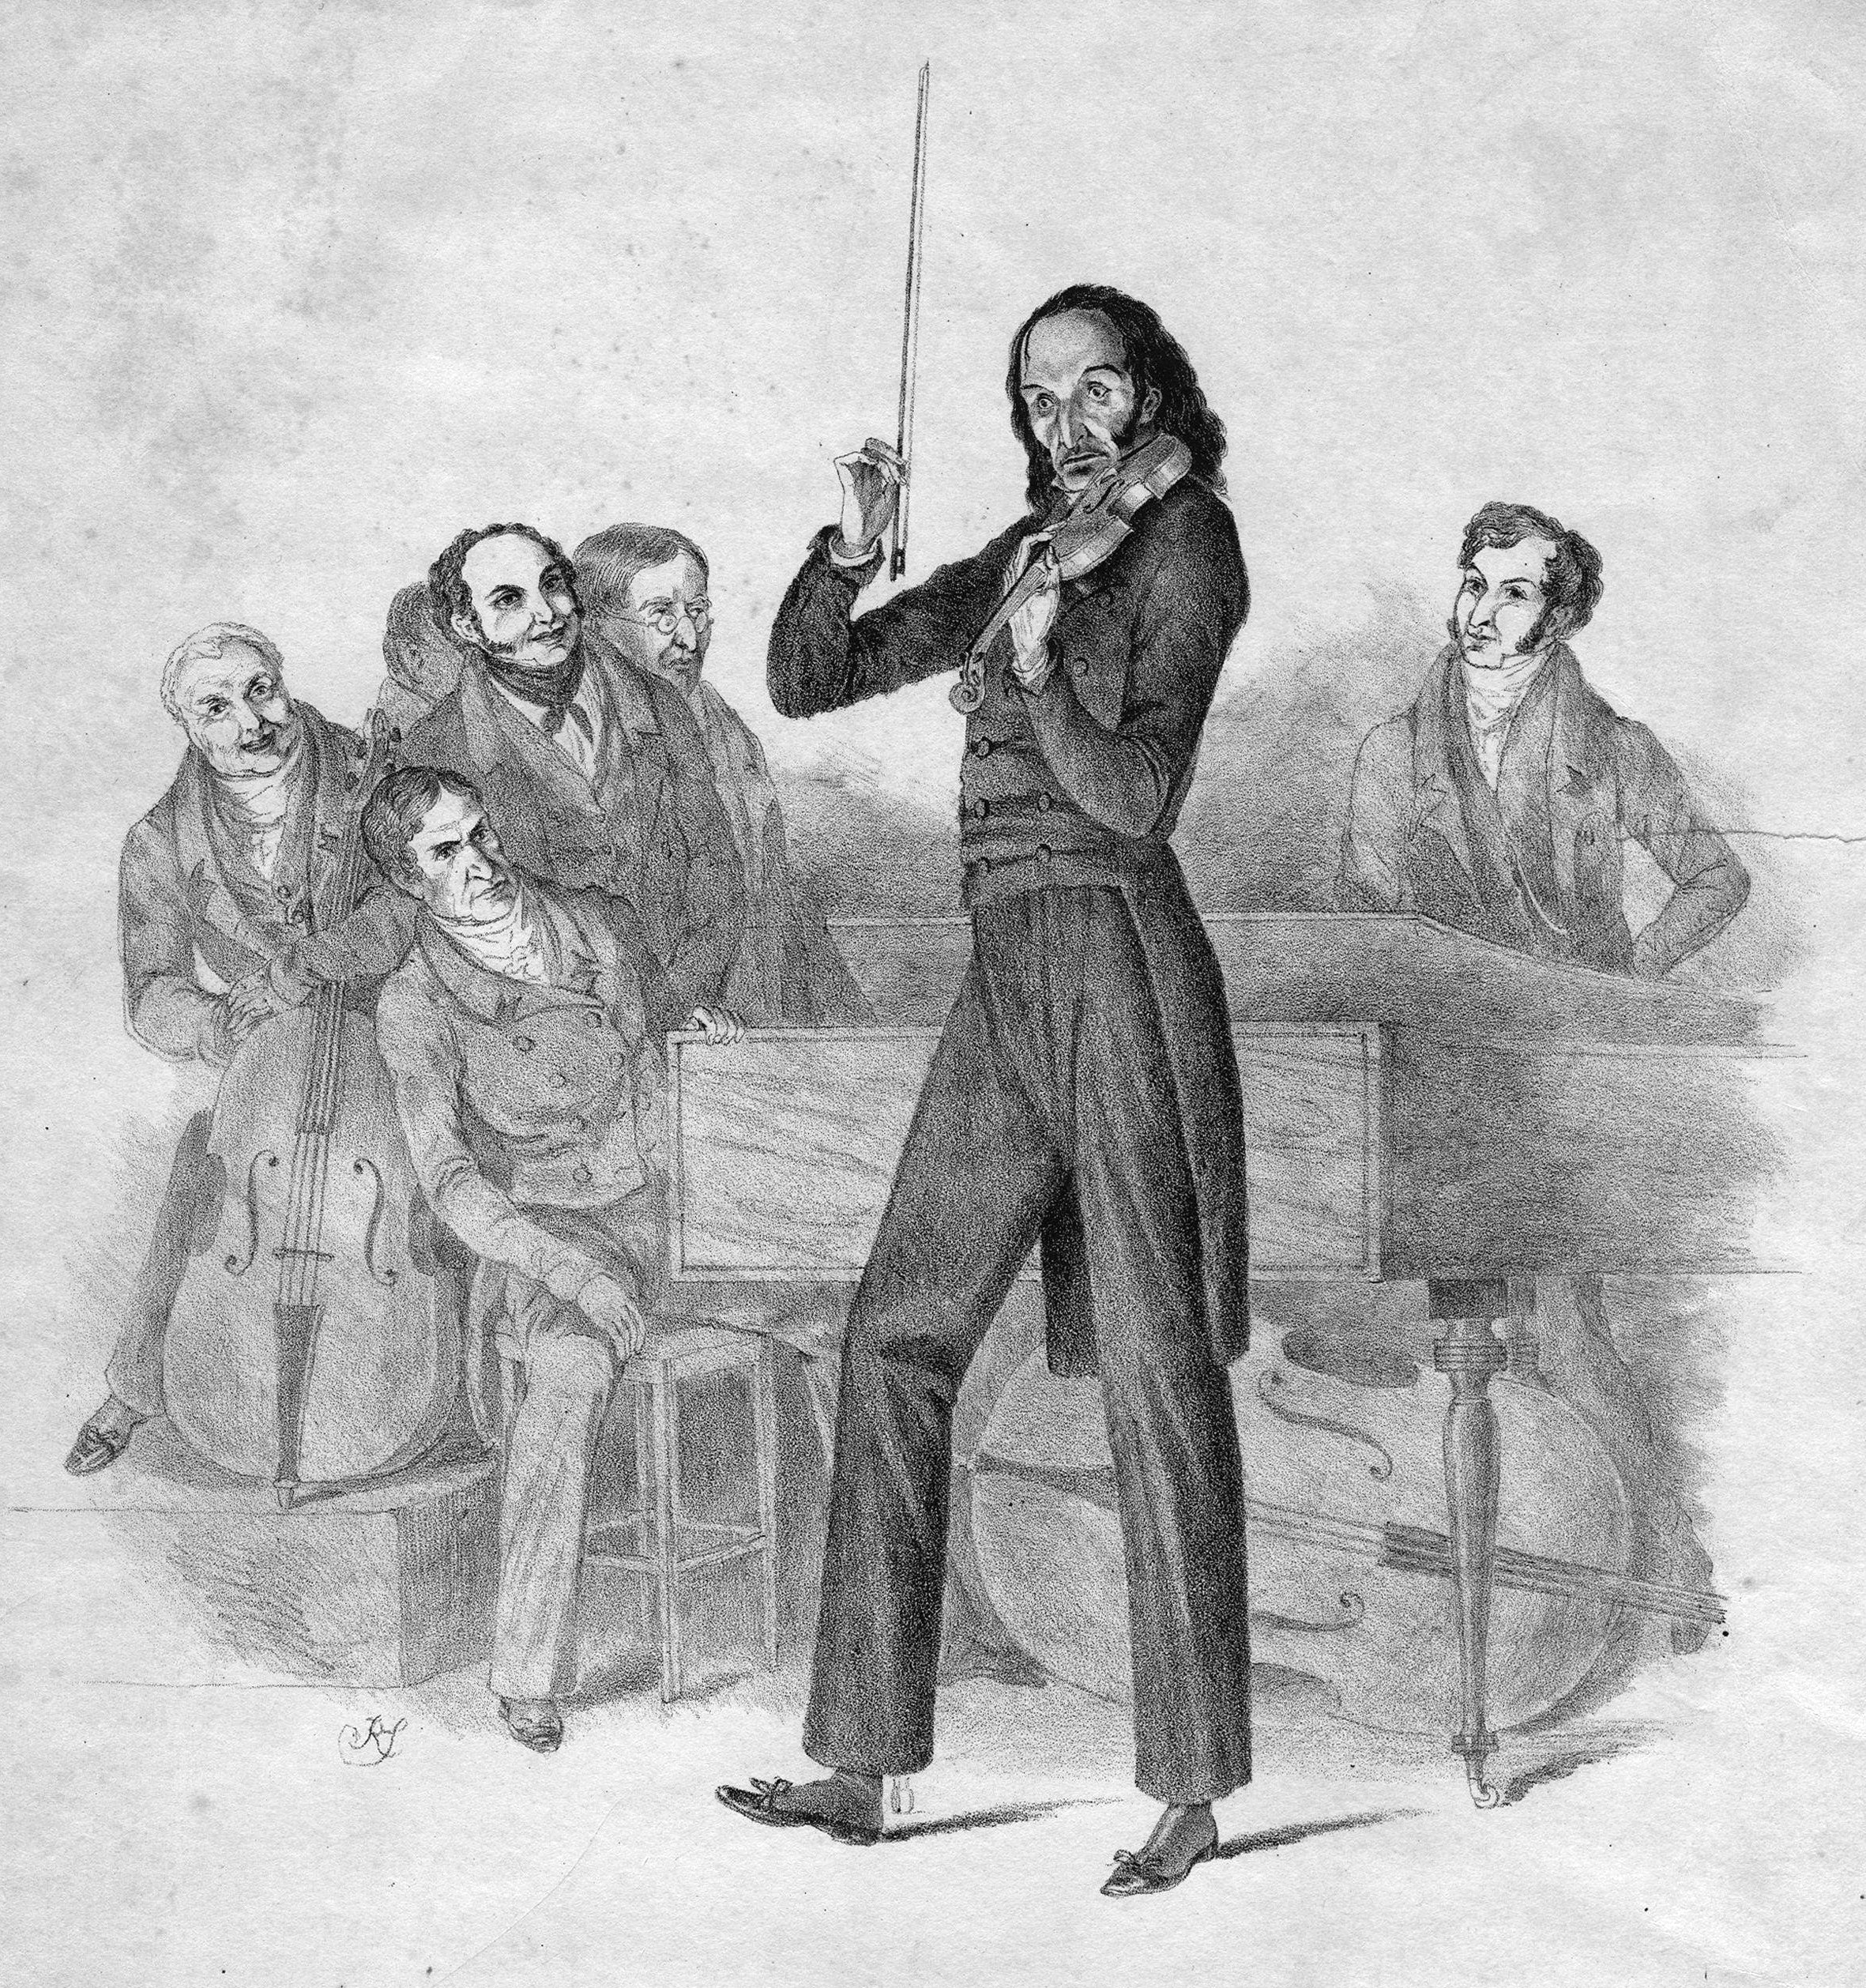 Nicolo Paganini by Richard James Lane in 1831